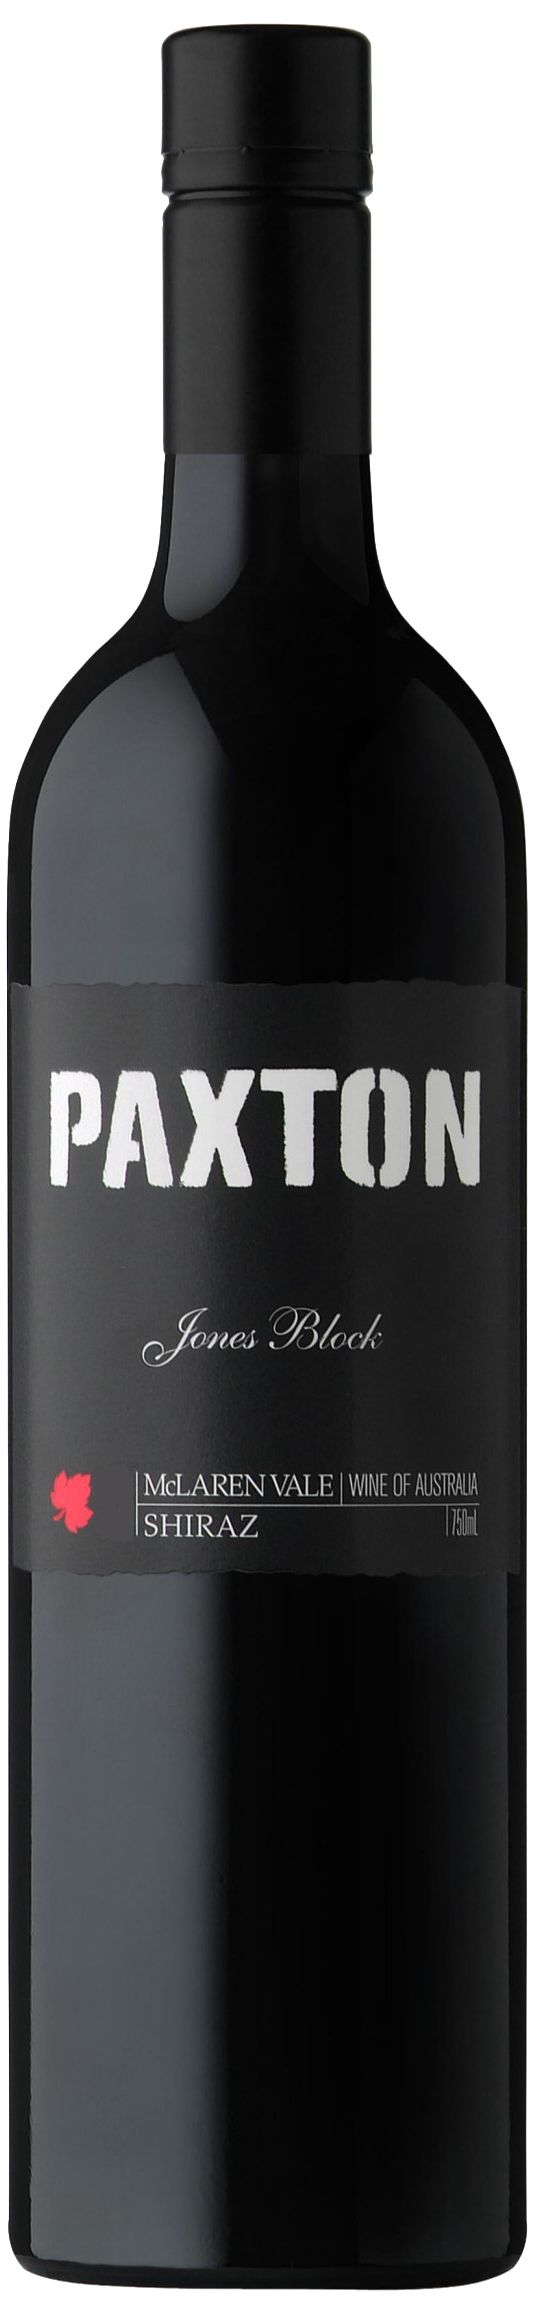 Paxton, Jones Block Shiraz, 2011